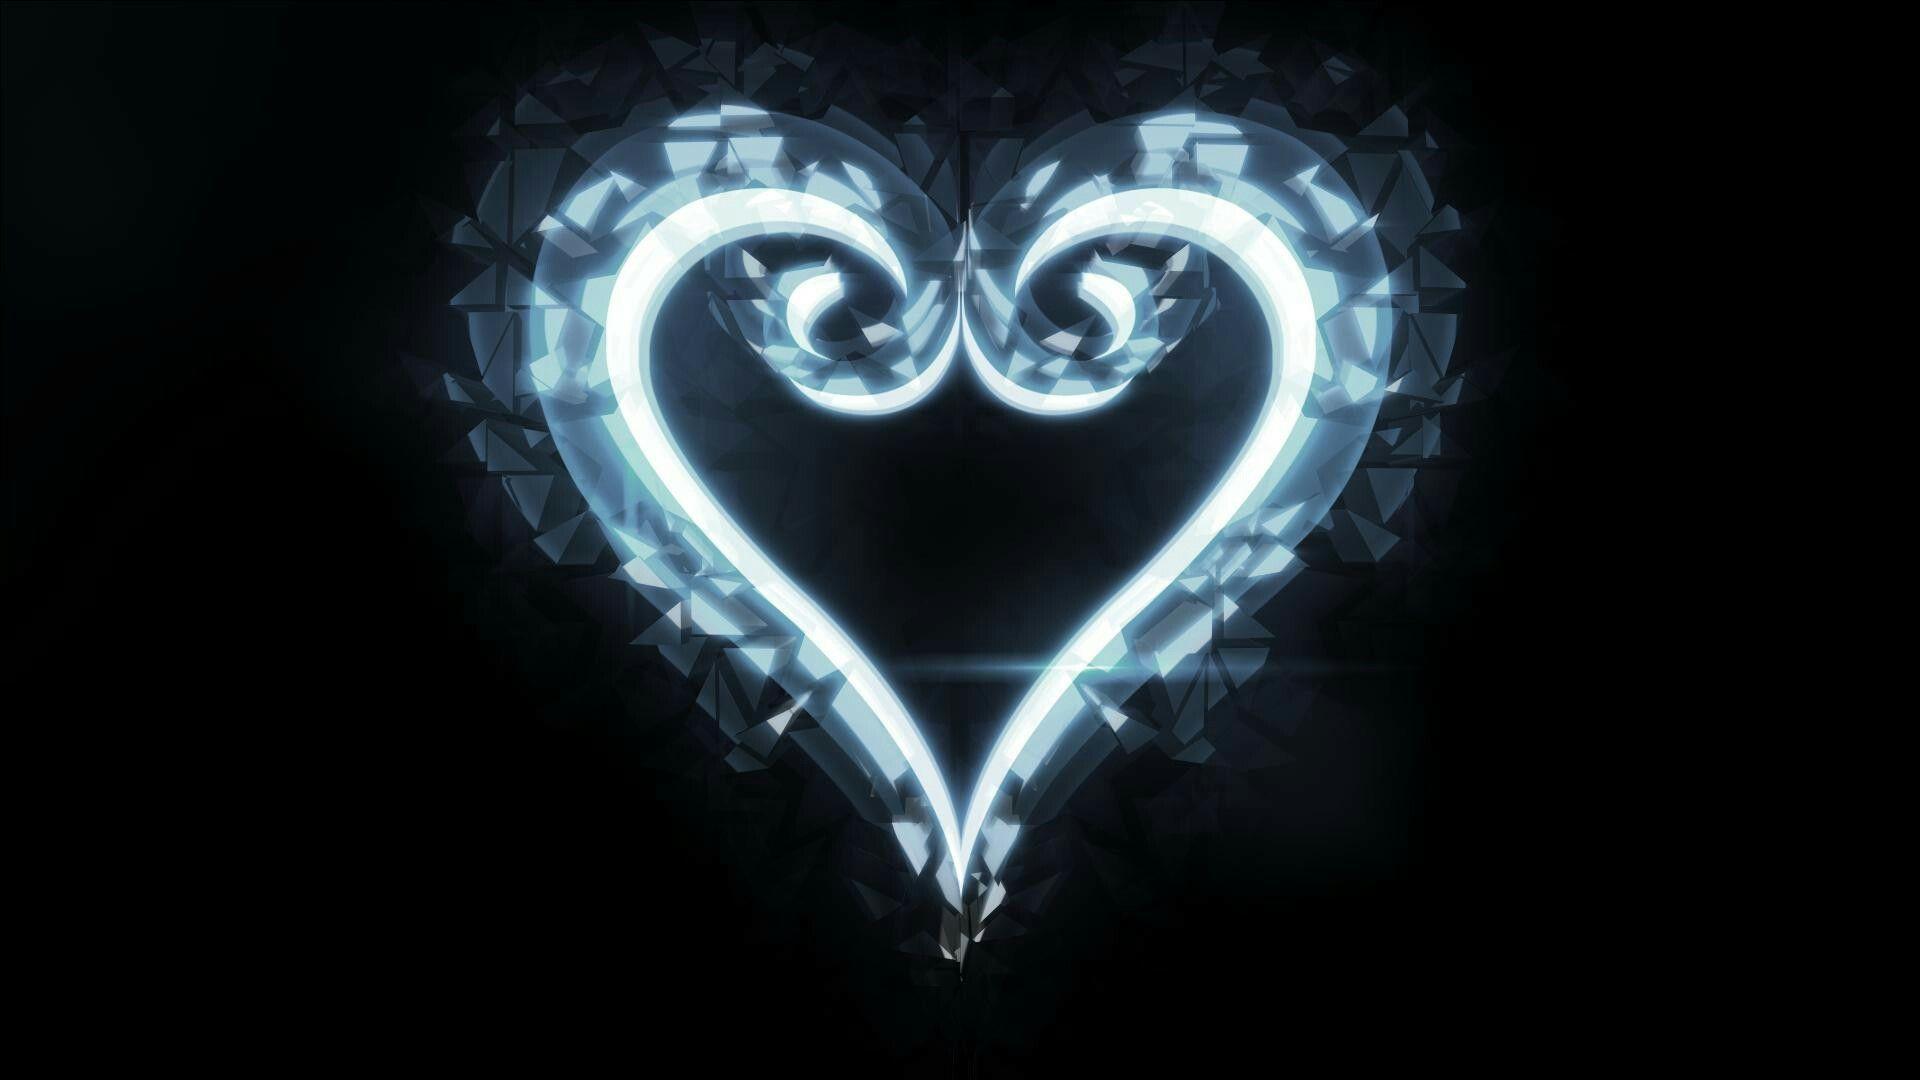 Kingdom Hearts Heartless Symbol Wallpapers - Wallpaper Cave